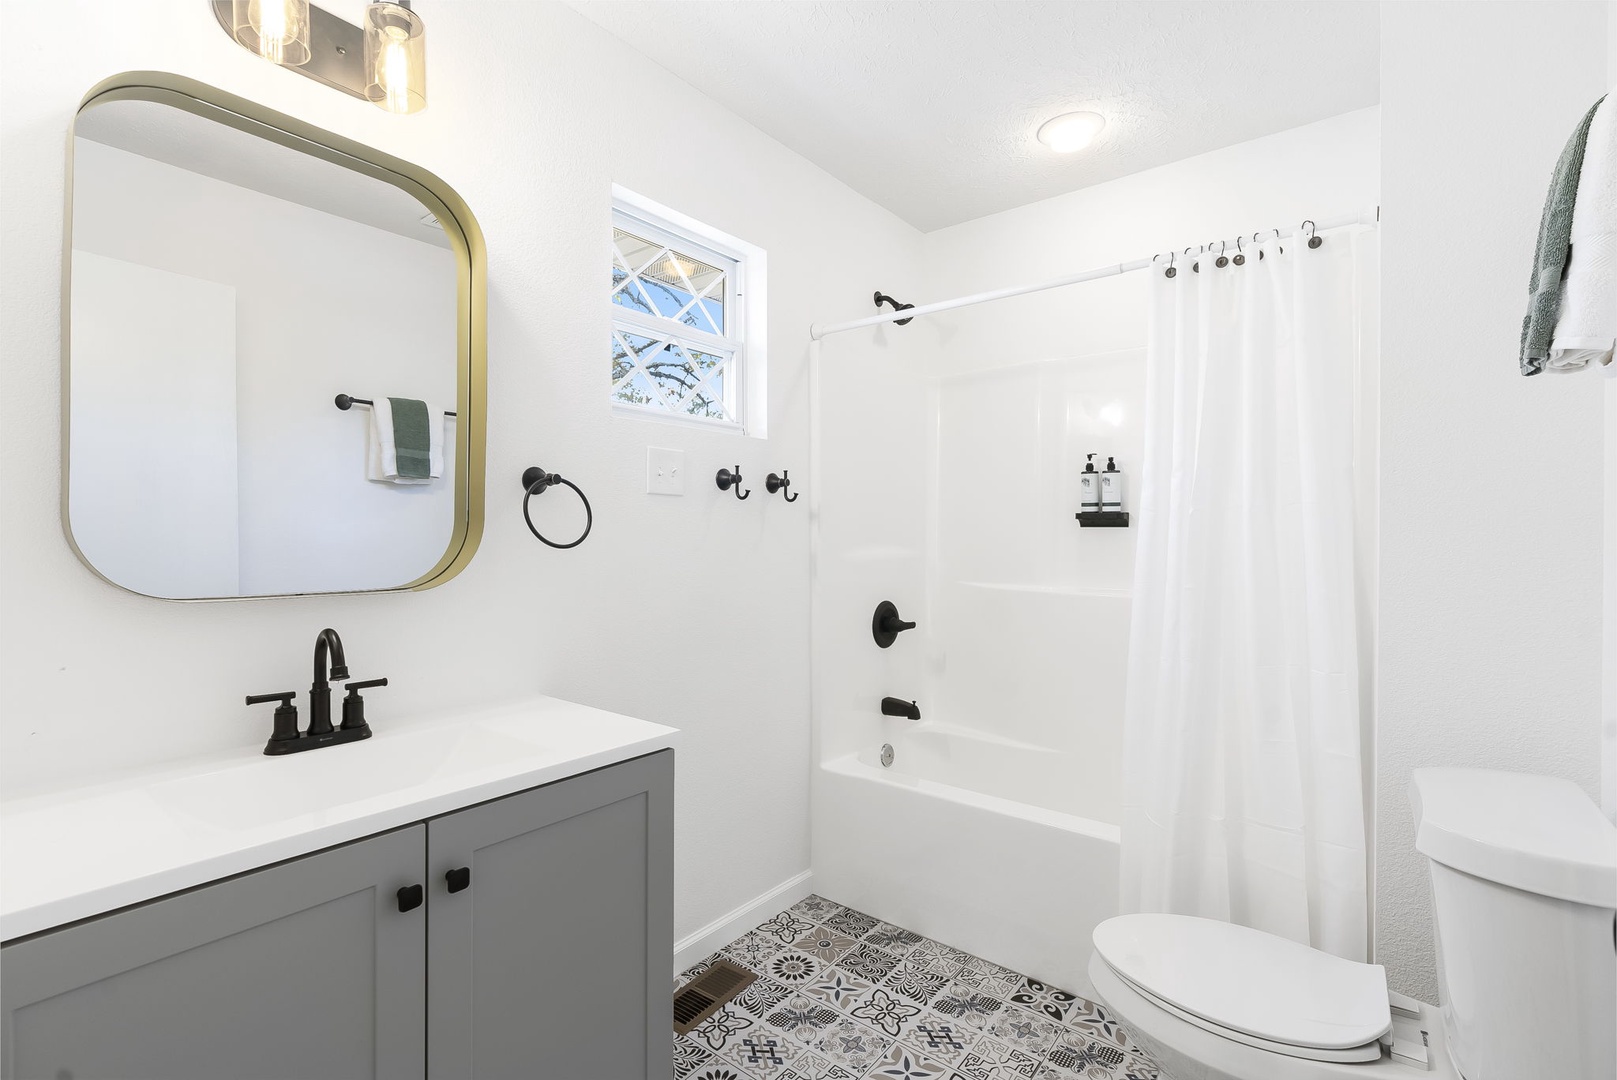 Unit 45: This 2nd floor en suite offers a single vanity & shower/tub combo